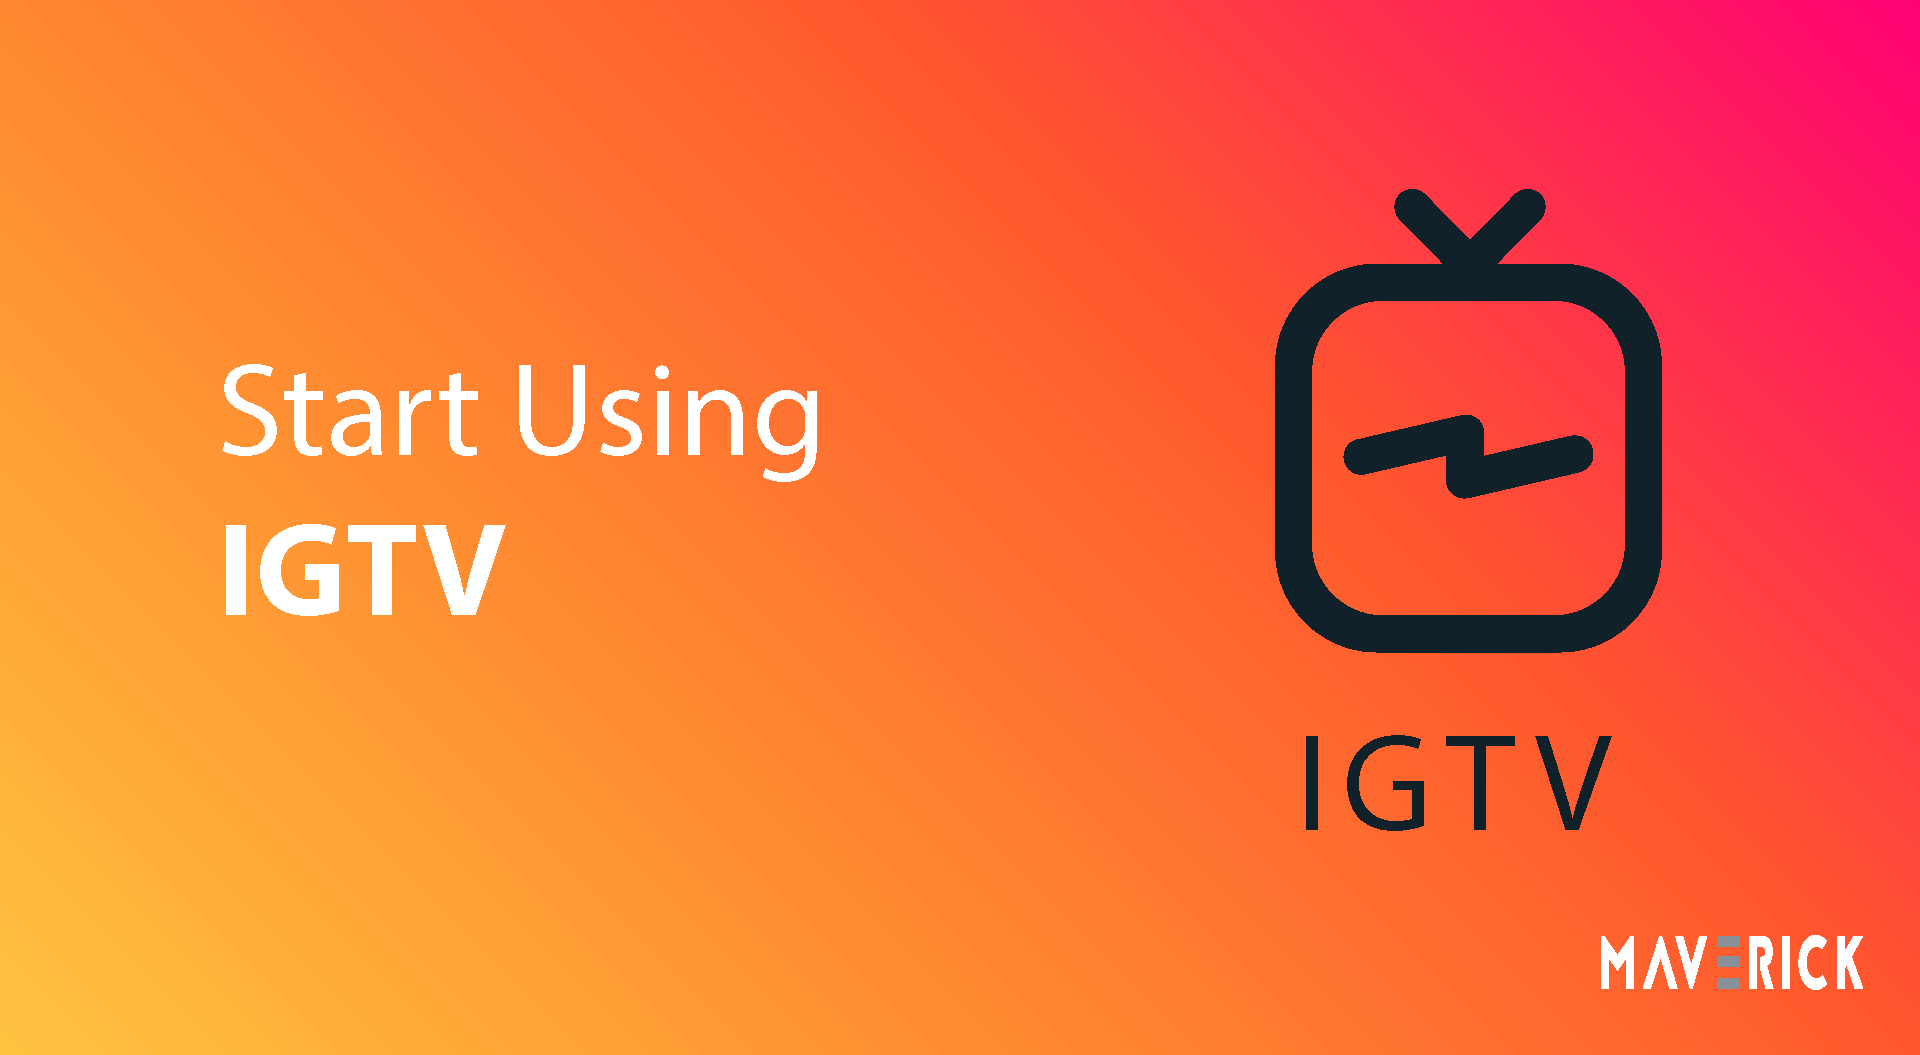 Start Using IGTV